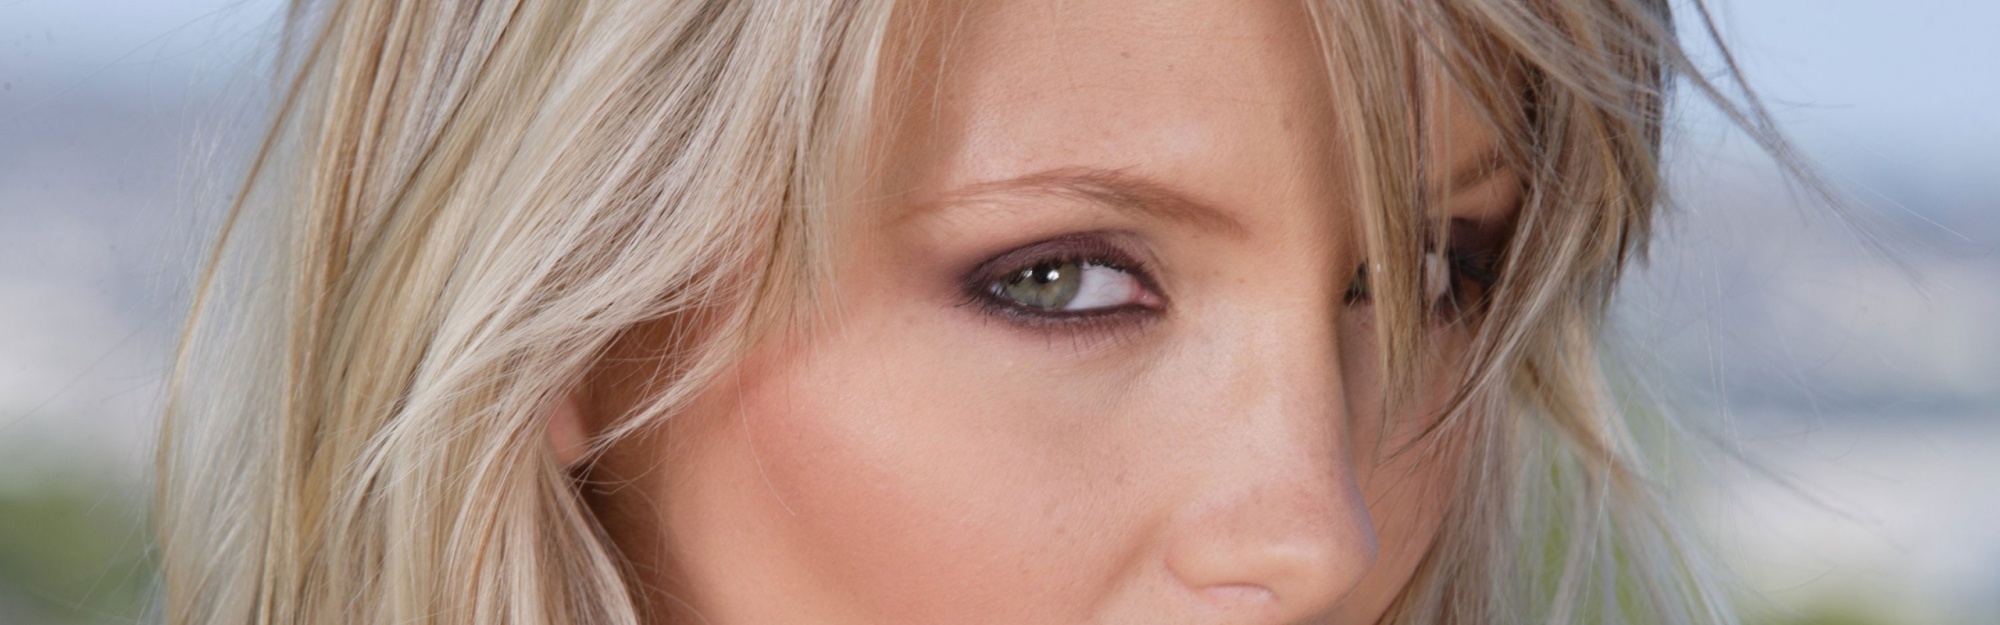 Blondes Women Closeup Models Denisa Brazdova Faces Licking Lips